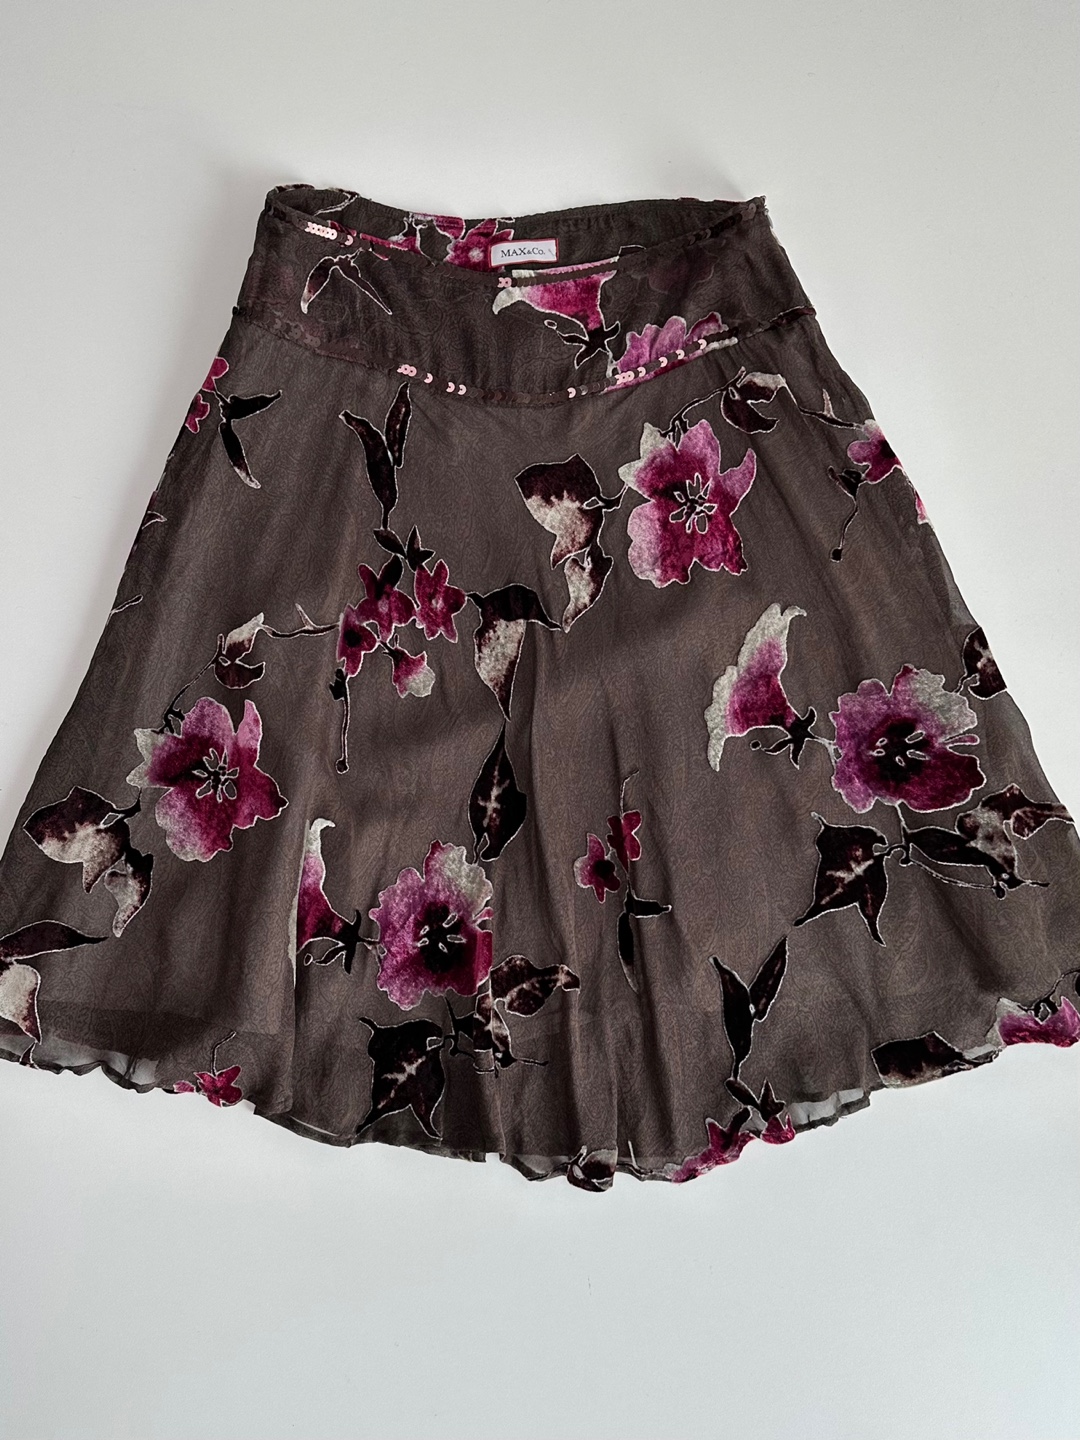 max&amp;co brown paisley purple velvet flower sequin detail silk skirt (made in italy)[27inch]